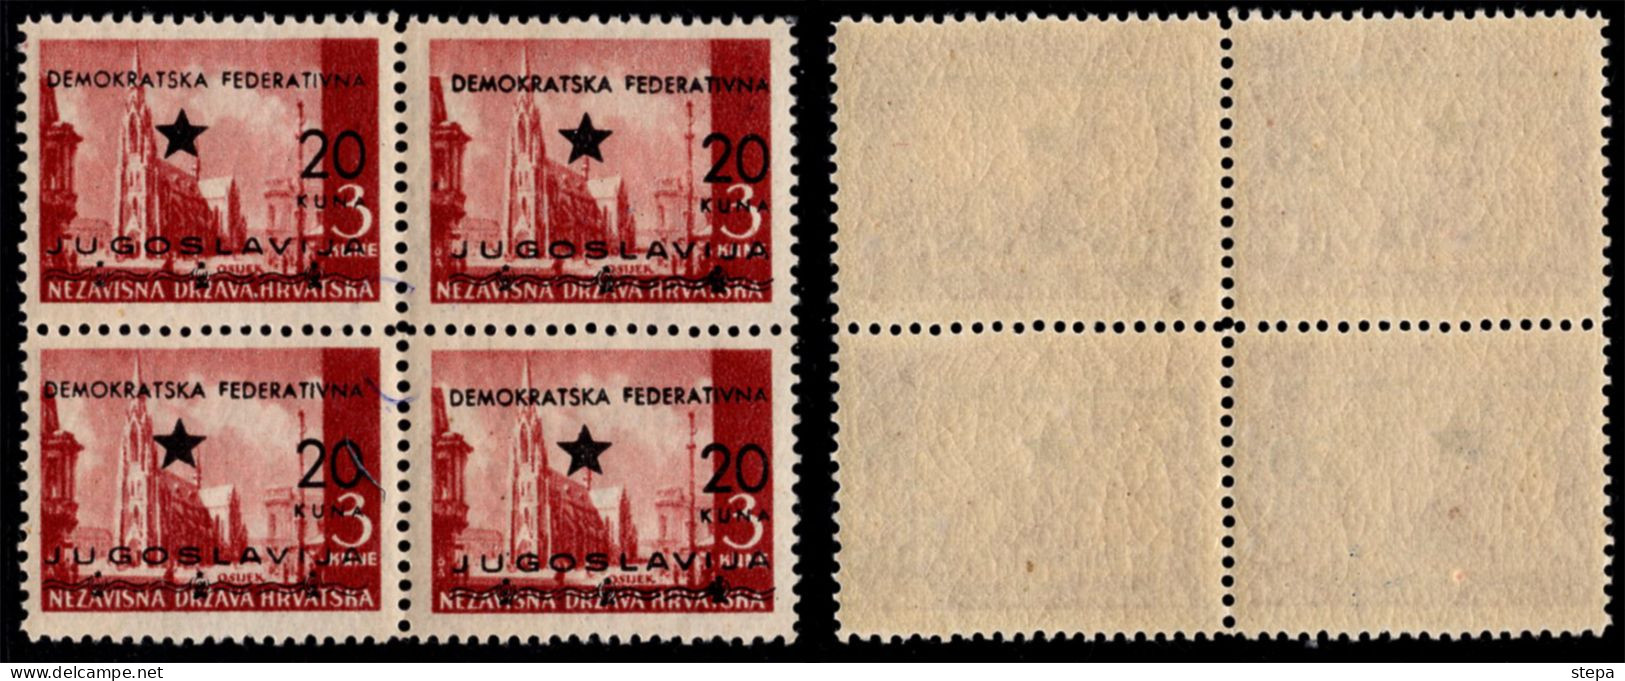 YUGOSLAVIA-CROATIA, PROVISIONAL ISSUE FOR SPLIT, 20/3 KUNA "LANDSCAPES" POROUS PAPER BLOCK OF FOUR, MNH 1945 RARE!!!! - Kroatien